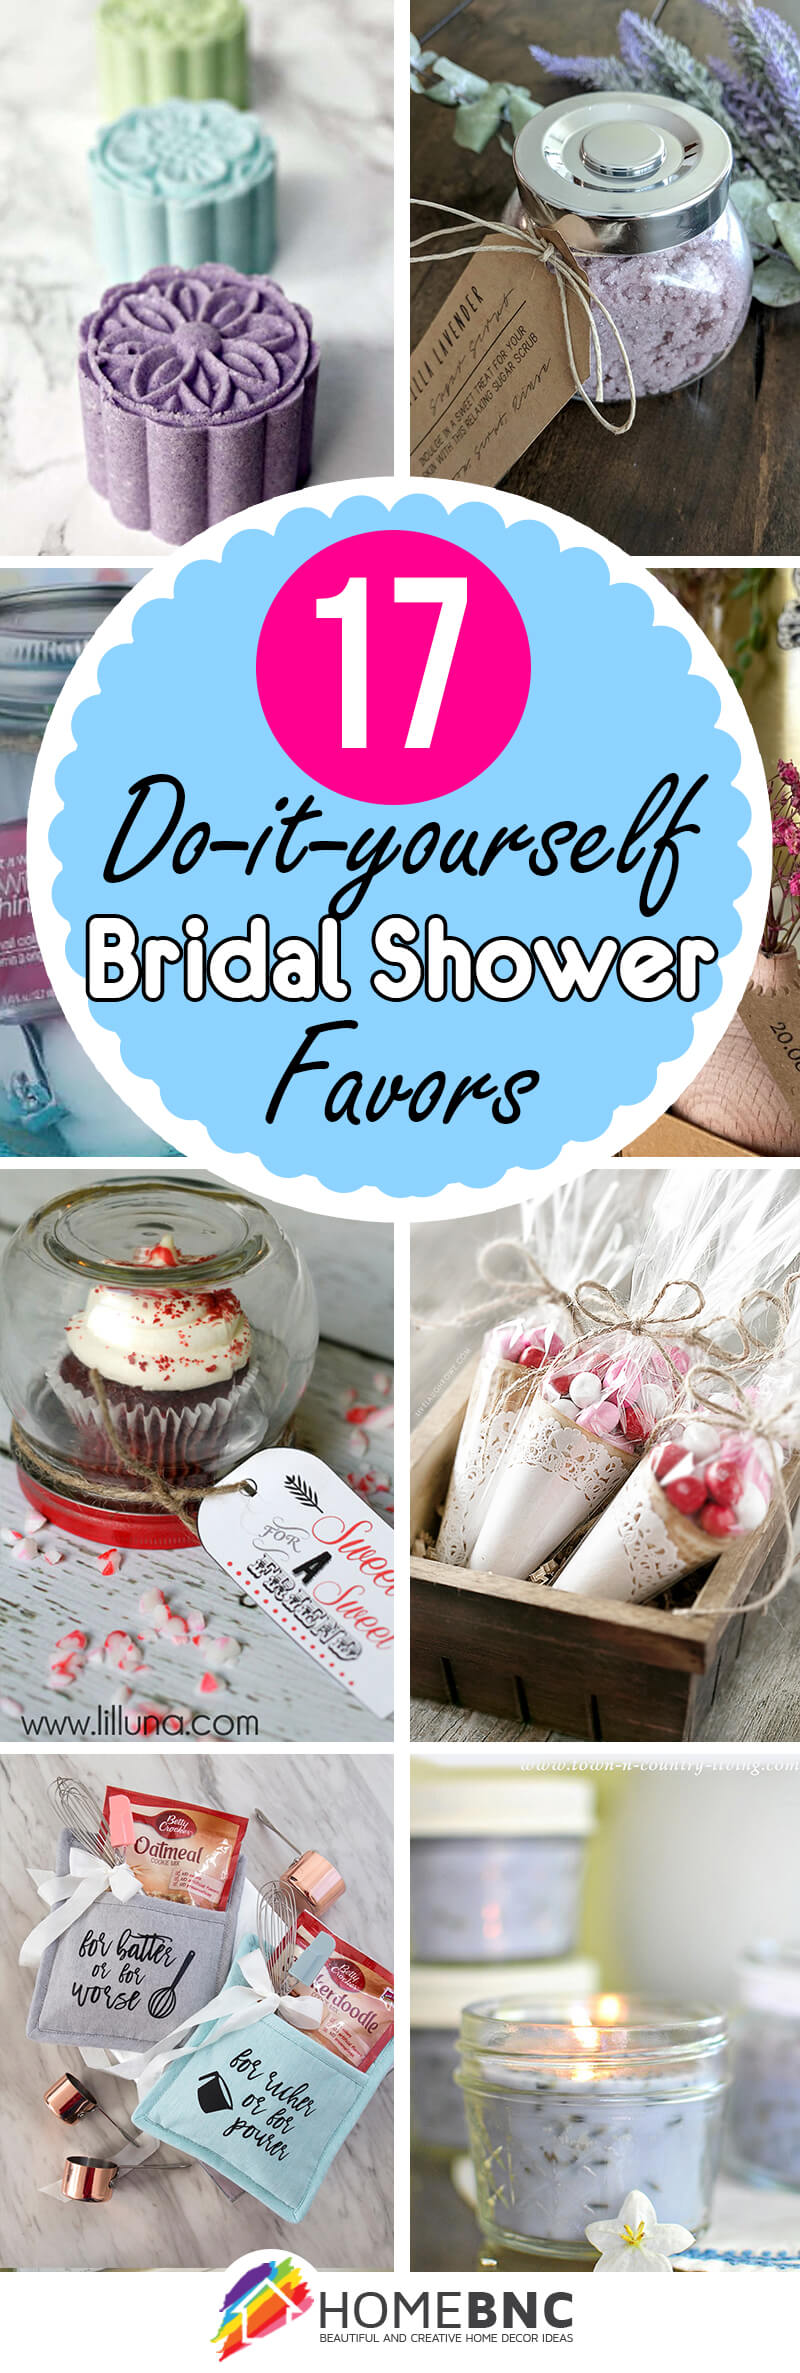 40 Bridal Shower Decoration Ideas We Love